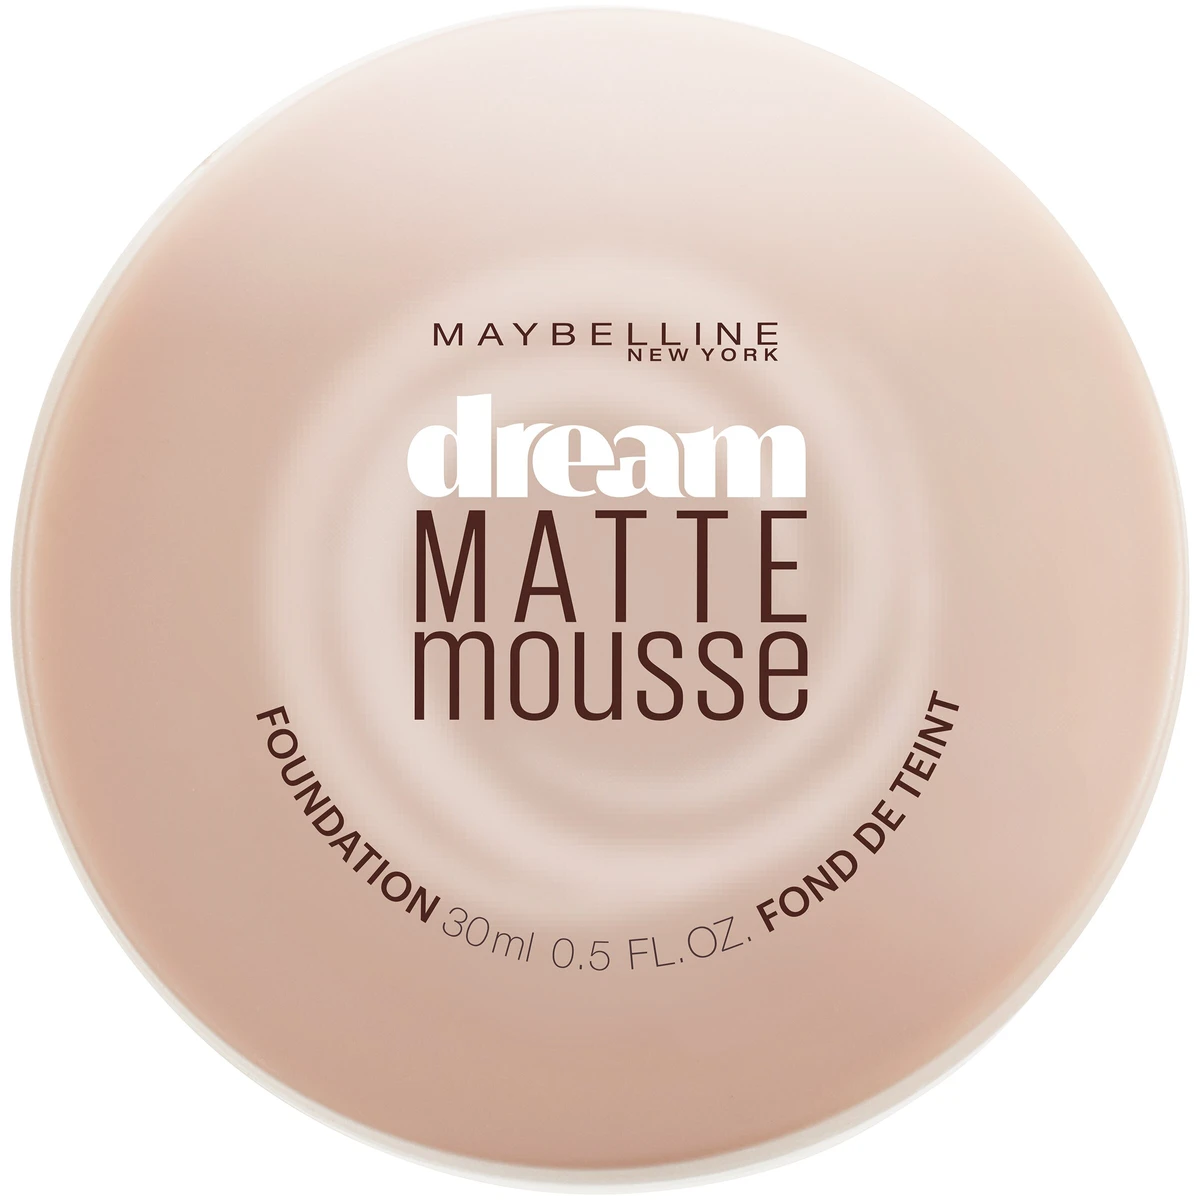 Maybelline Dream Matte Mousse Foundation  Medium Shades  0.5 fl oz